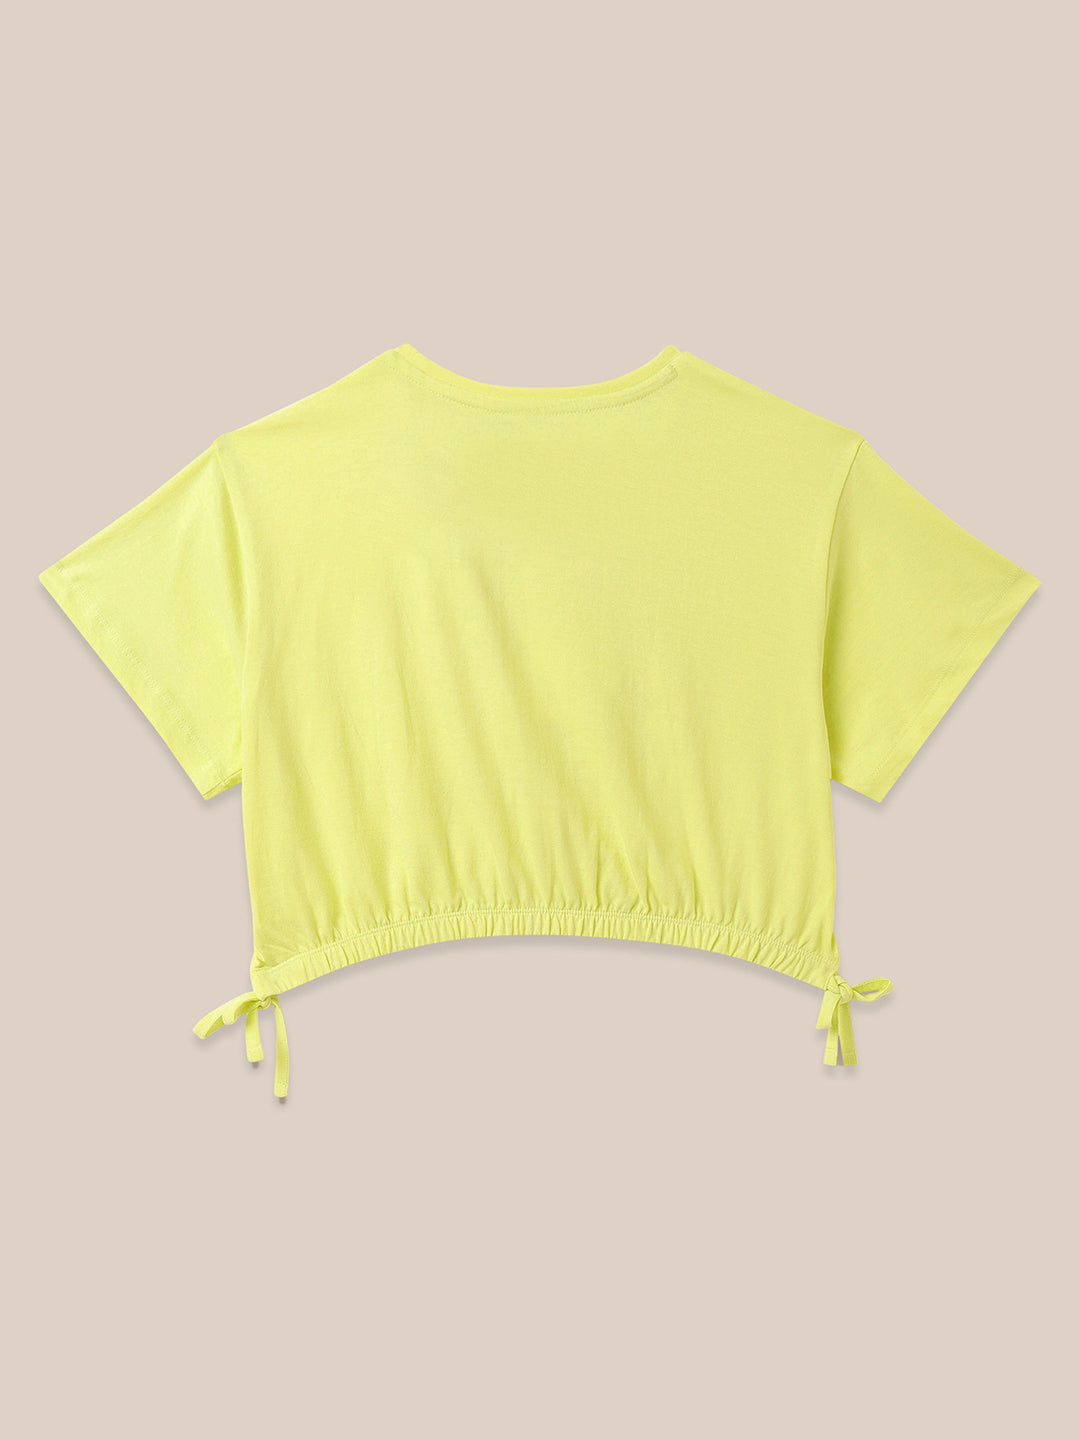 Kidsville Hello Kitty Printed Yellow Tshirt For Girls